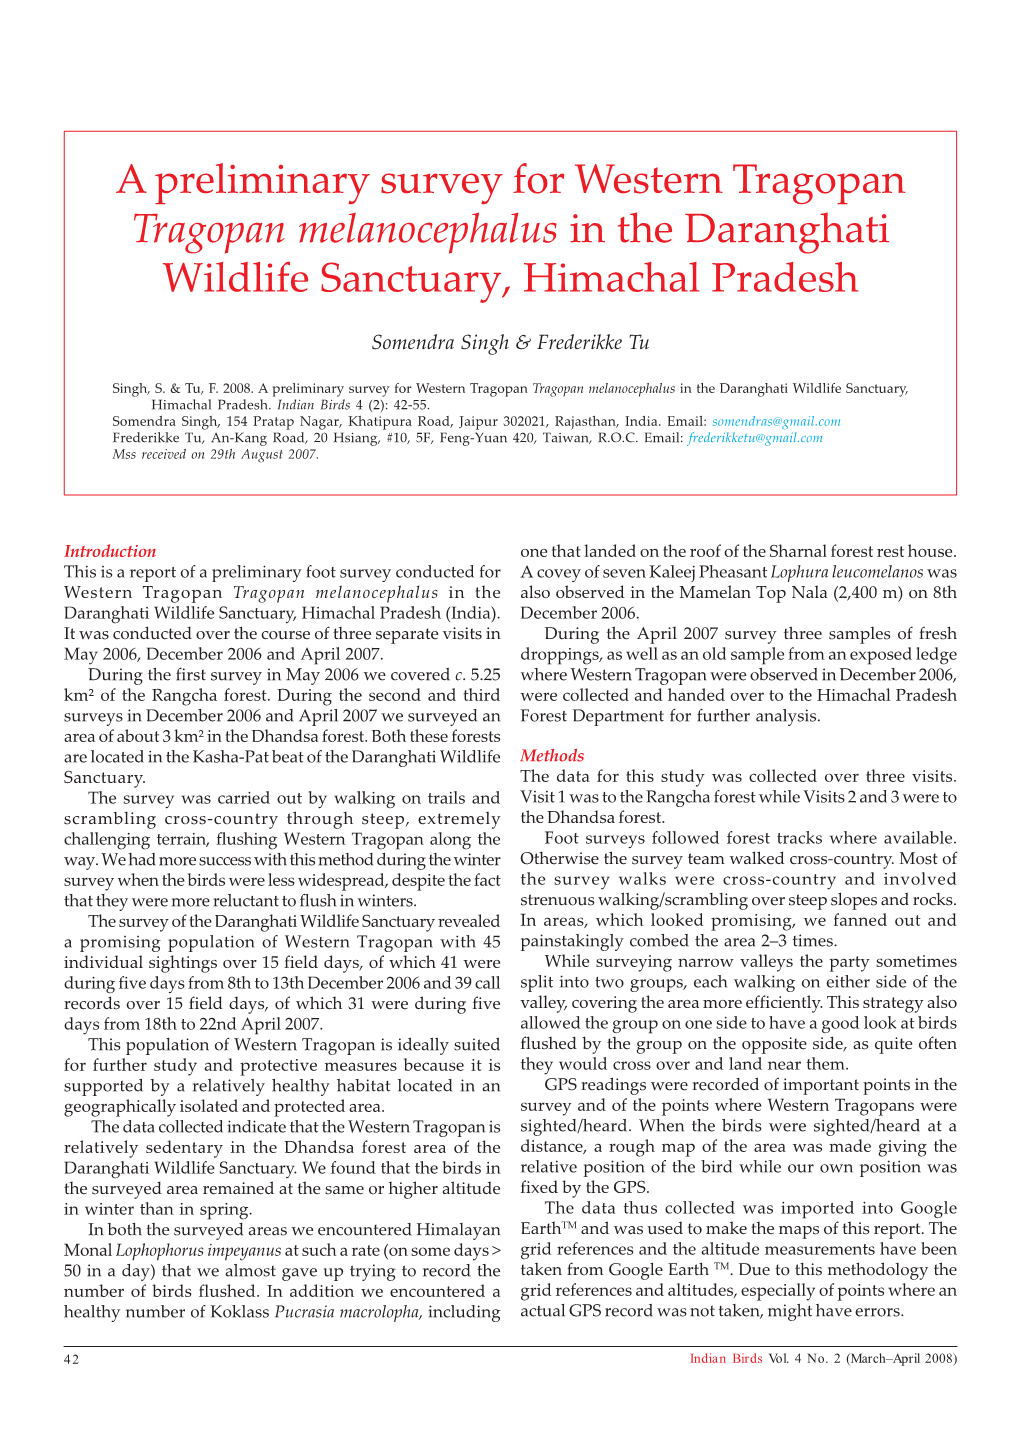 A Preliminary Survey for Western Tragopan Tragopan Melanocephalus in the Daranghati Wildlife Sanctuary, Himachal Pradesh